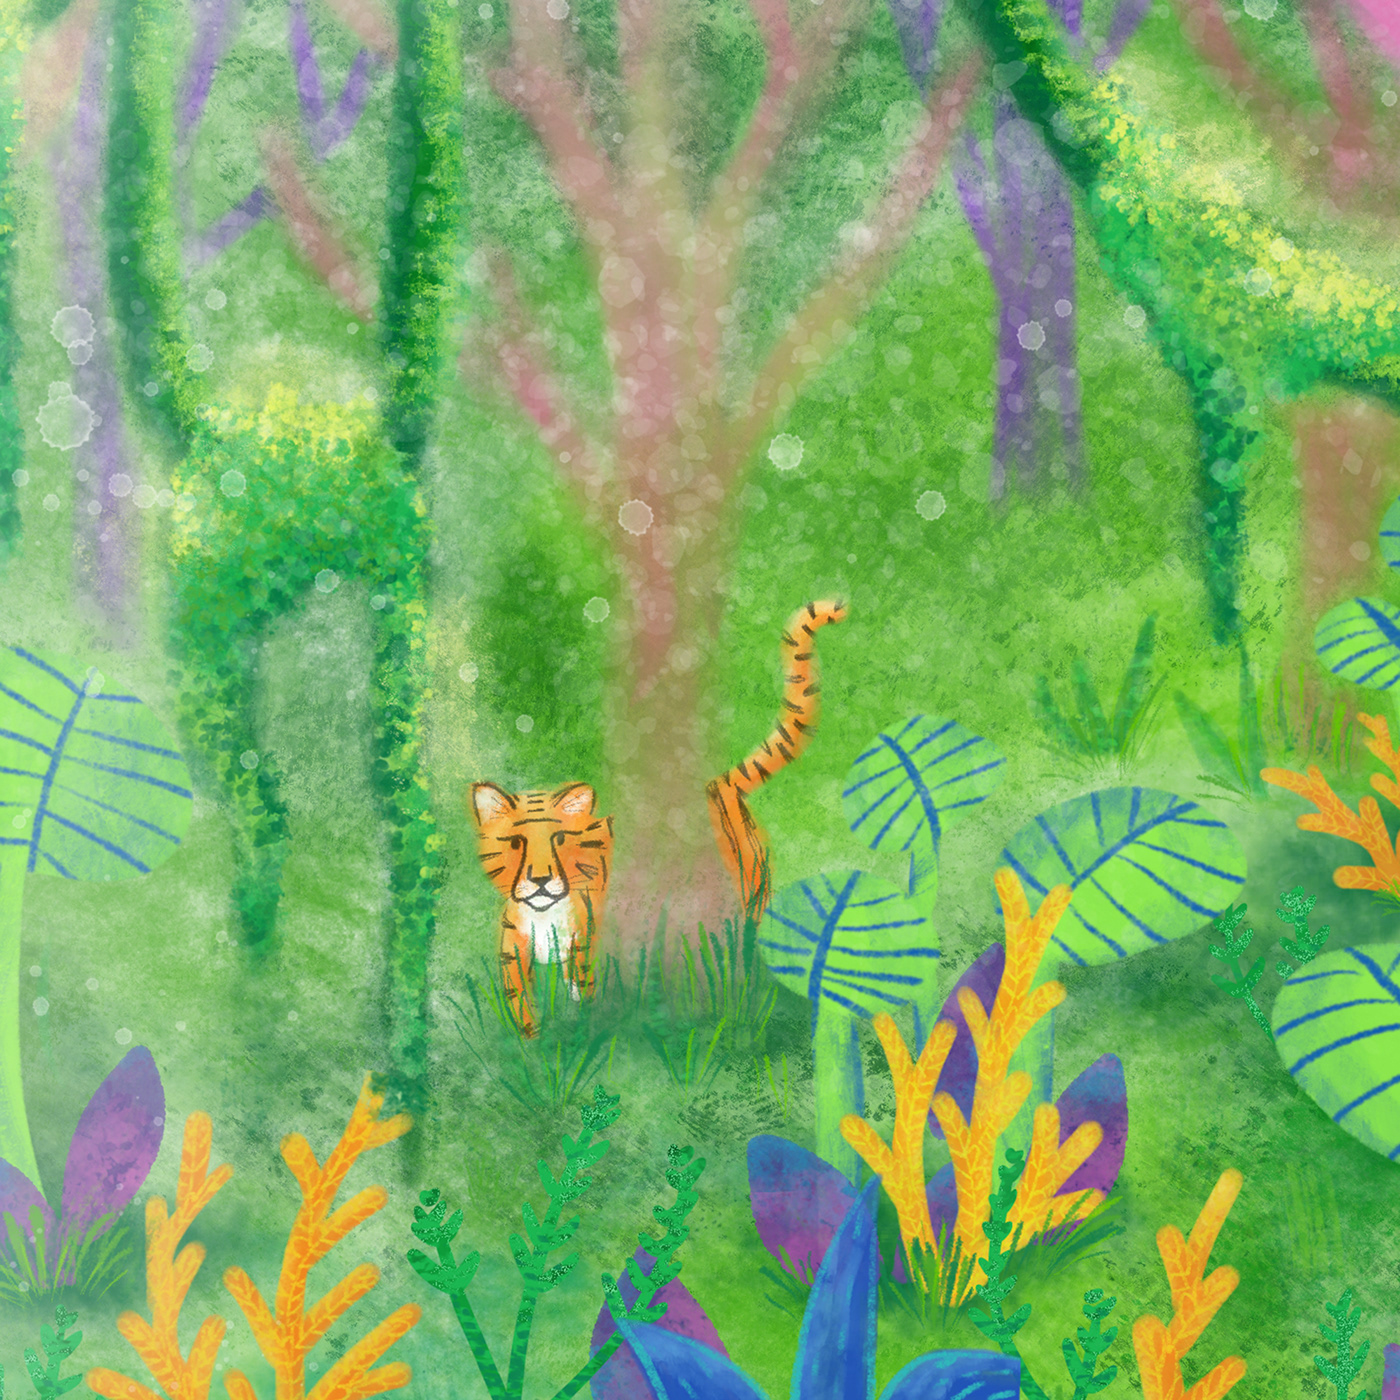 mermaid jungle tiger art painting   ILLUSTRATION  children's illustration colors